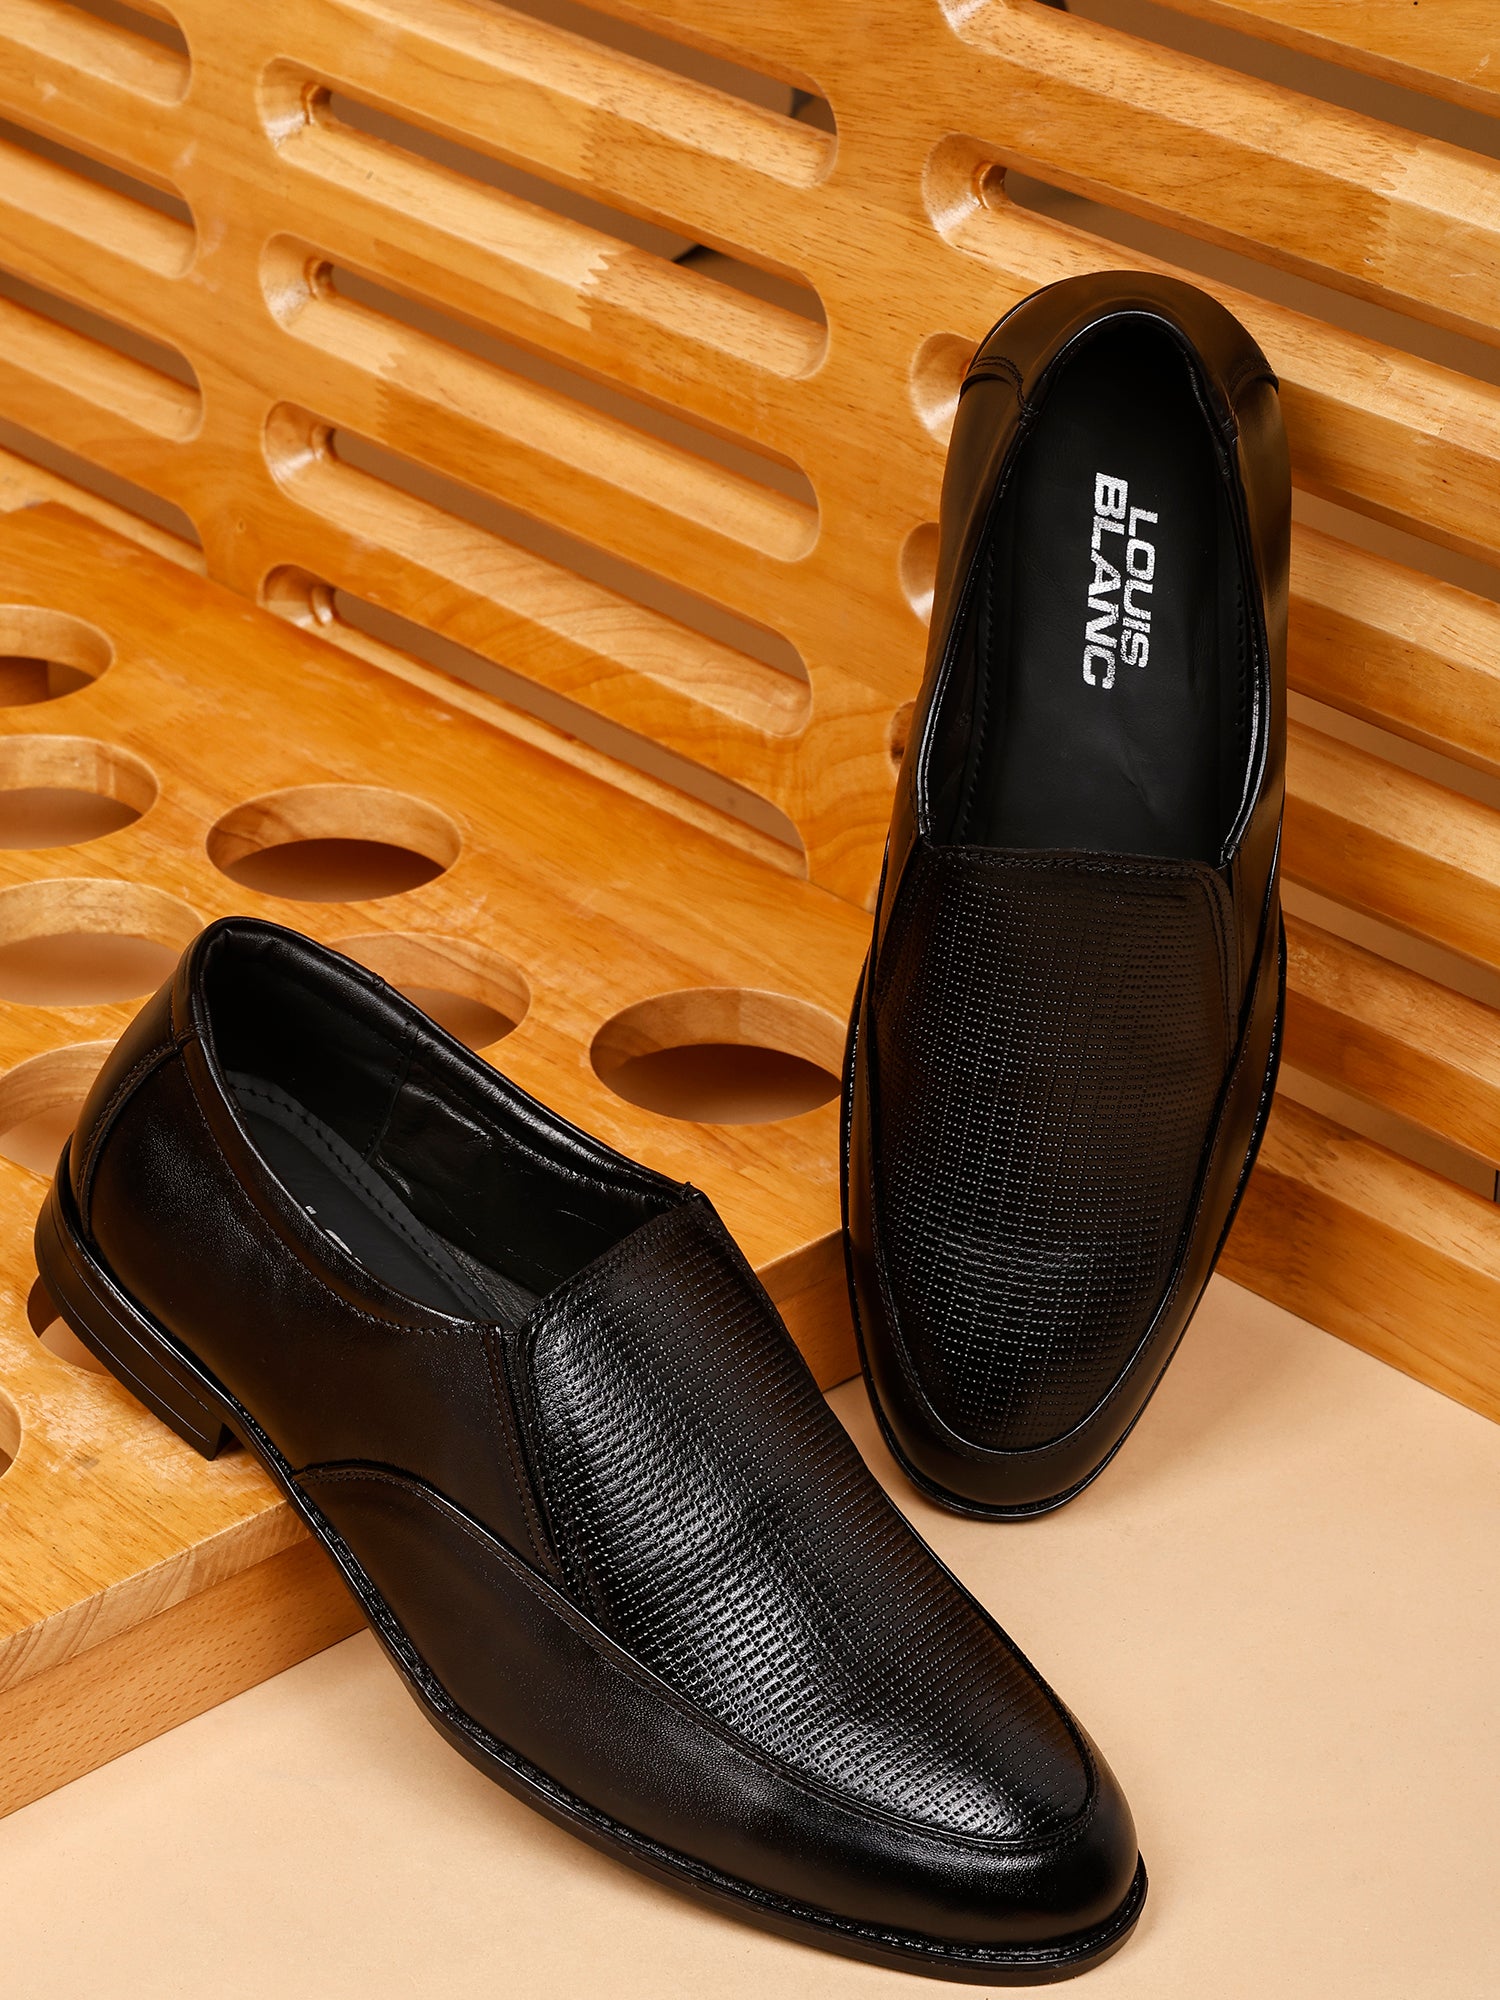 Men's Obsidian Black Slipon Style Comfortable Loafers (LB 36)